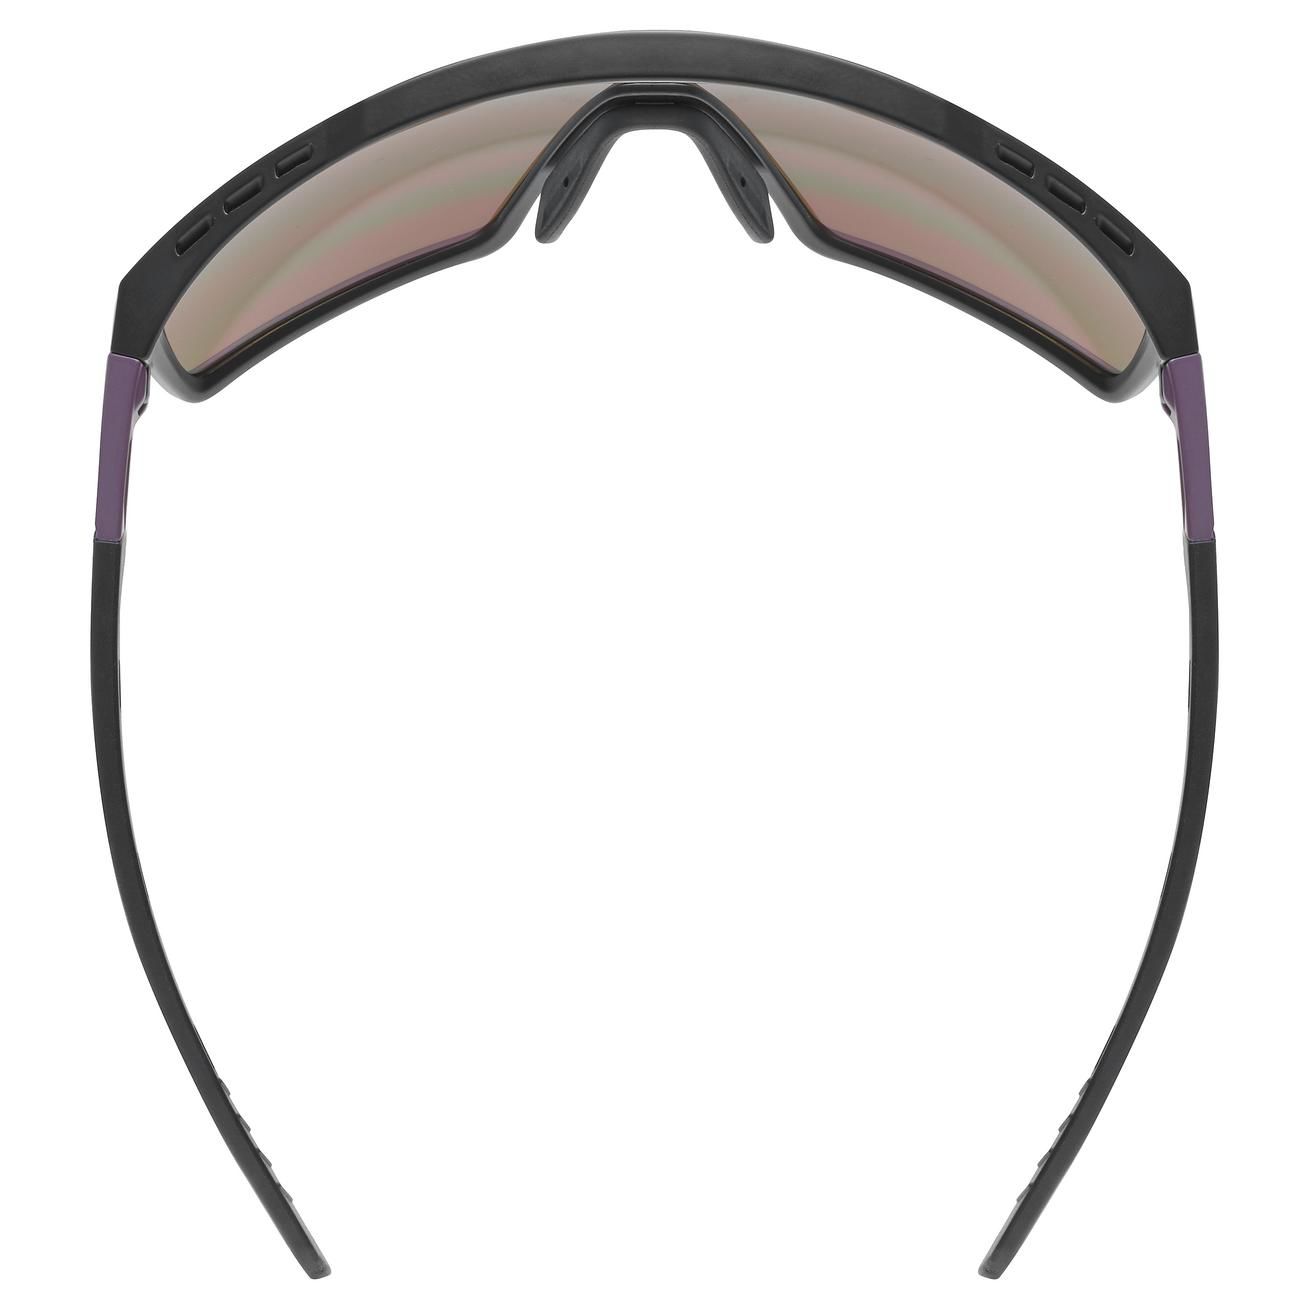 slnečné okuliare uvex mtn perform black-purple mat s3